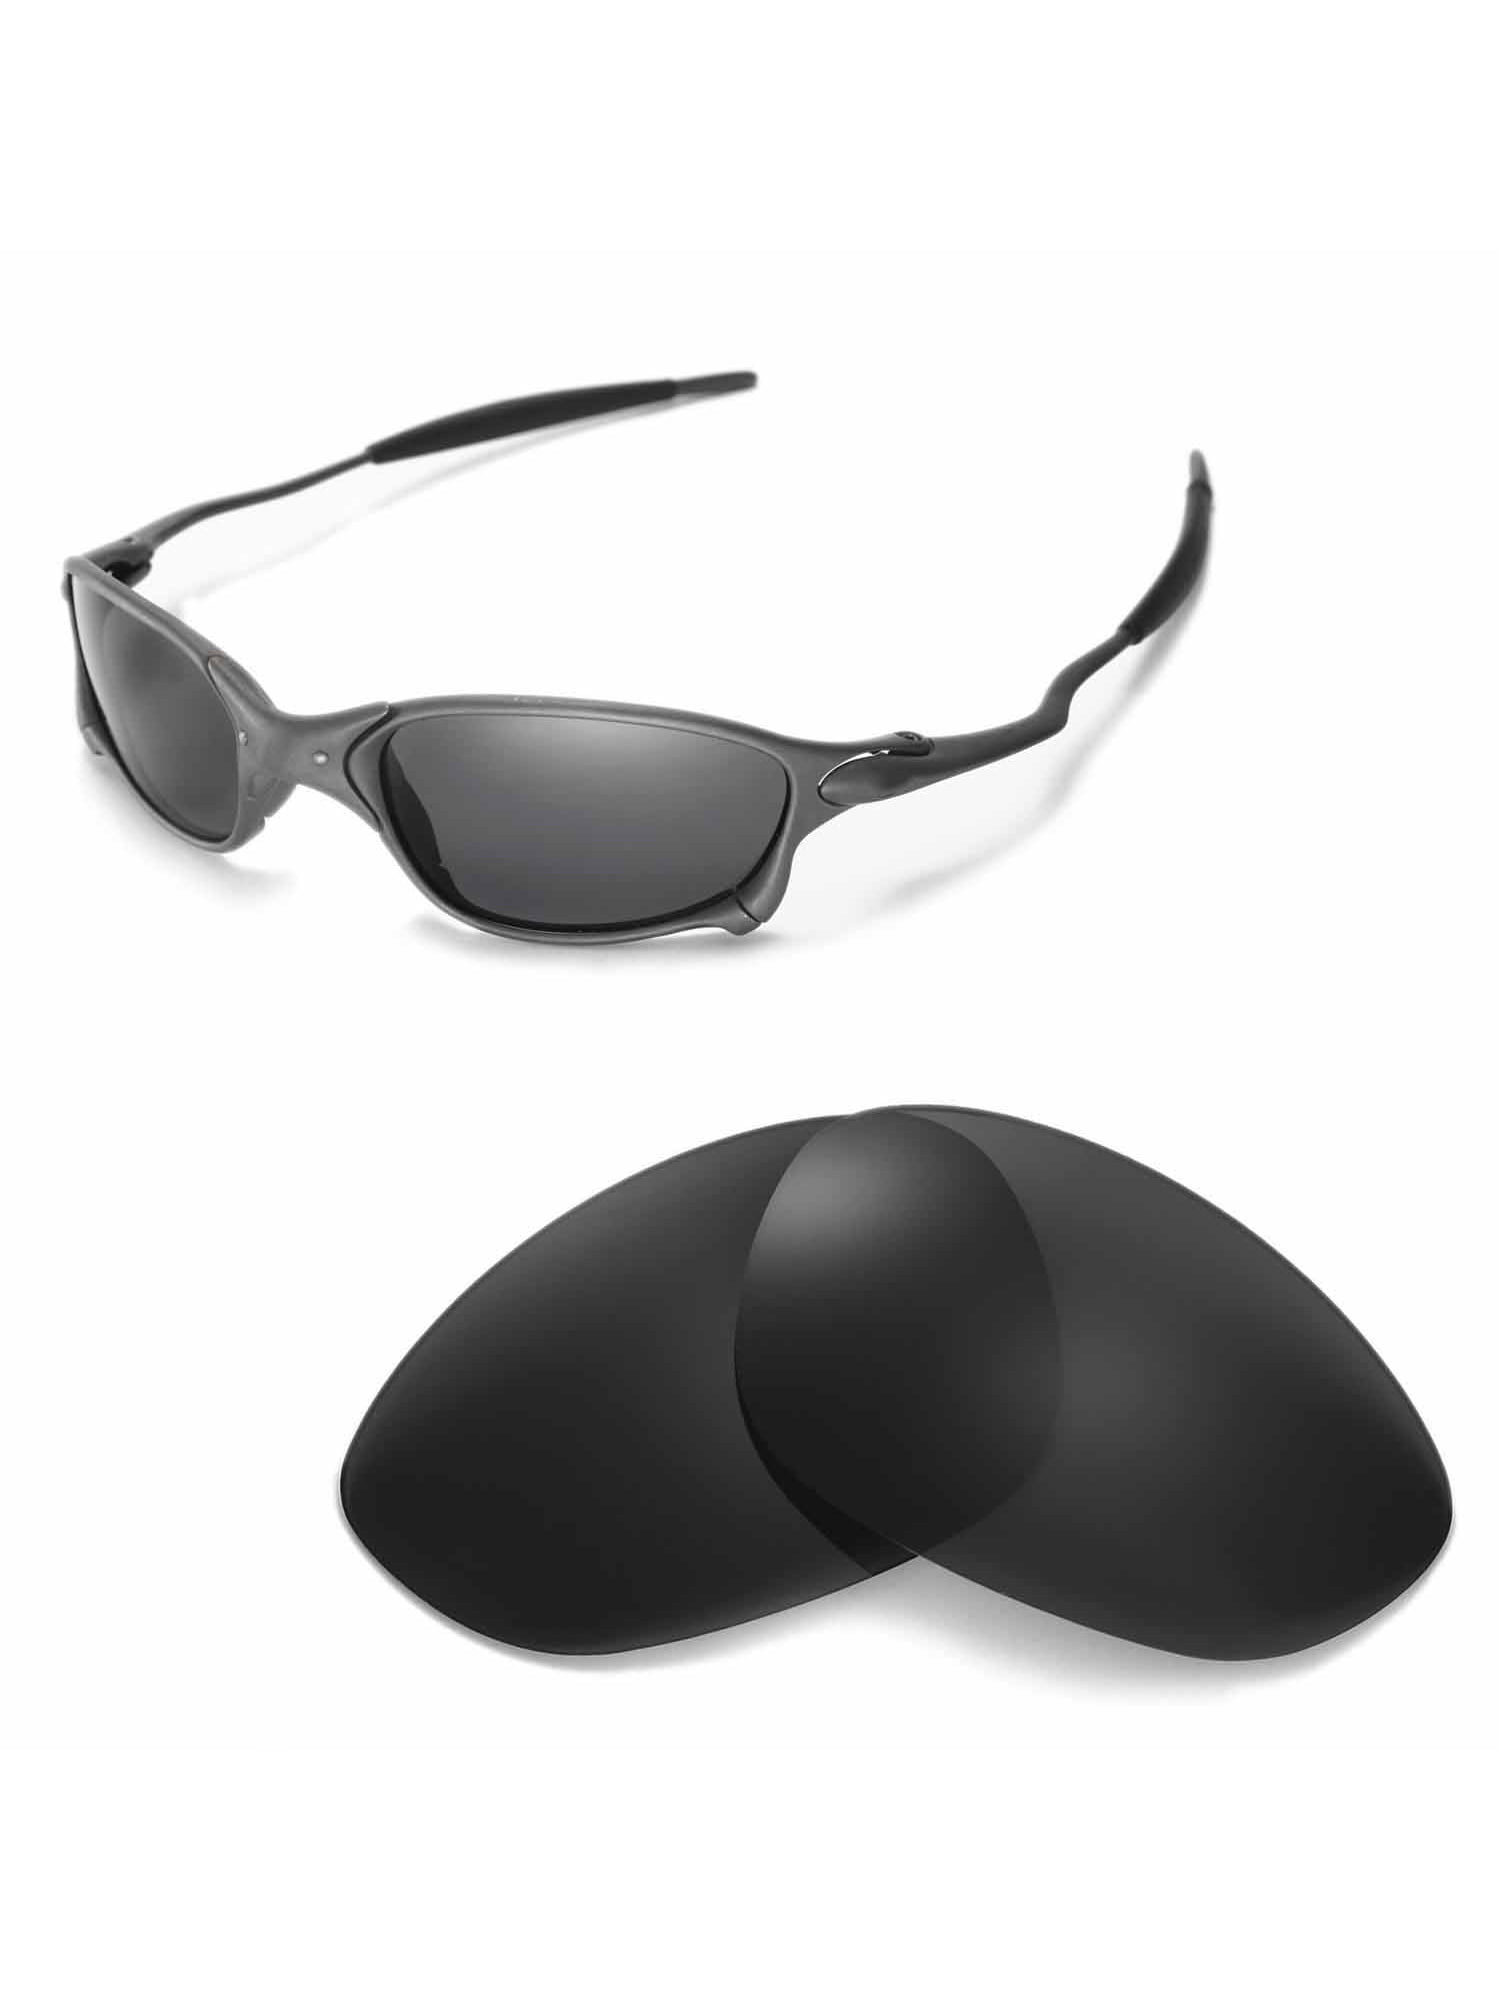 Walleva Black Replacement for Oakley X XX Sunglasses Walmart.com